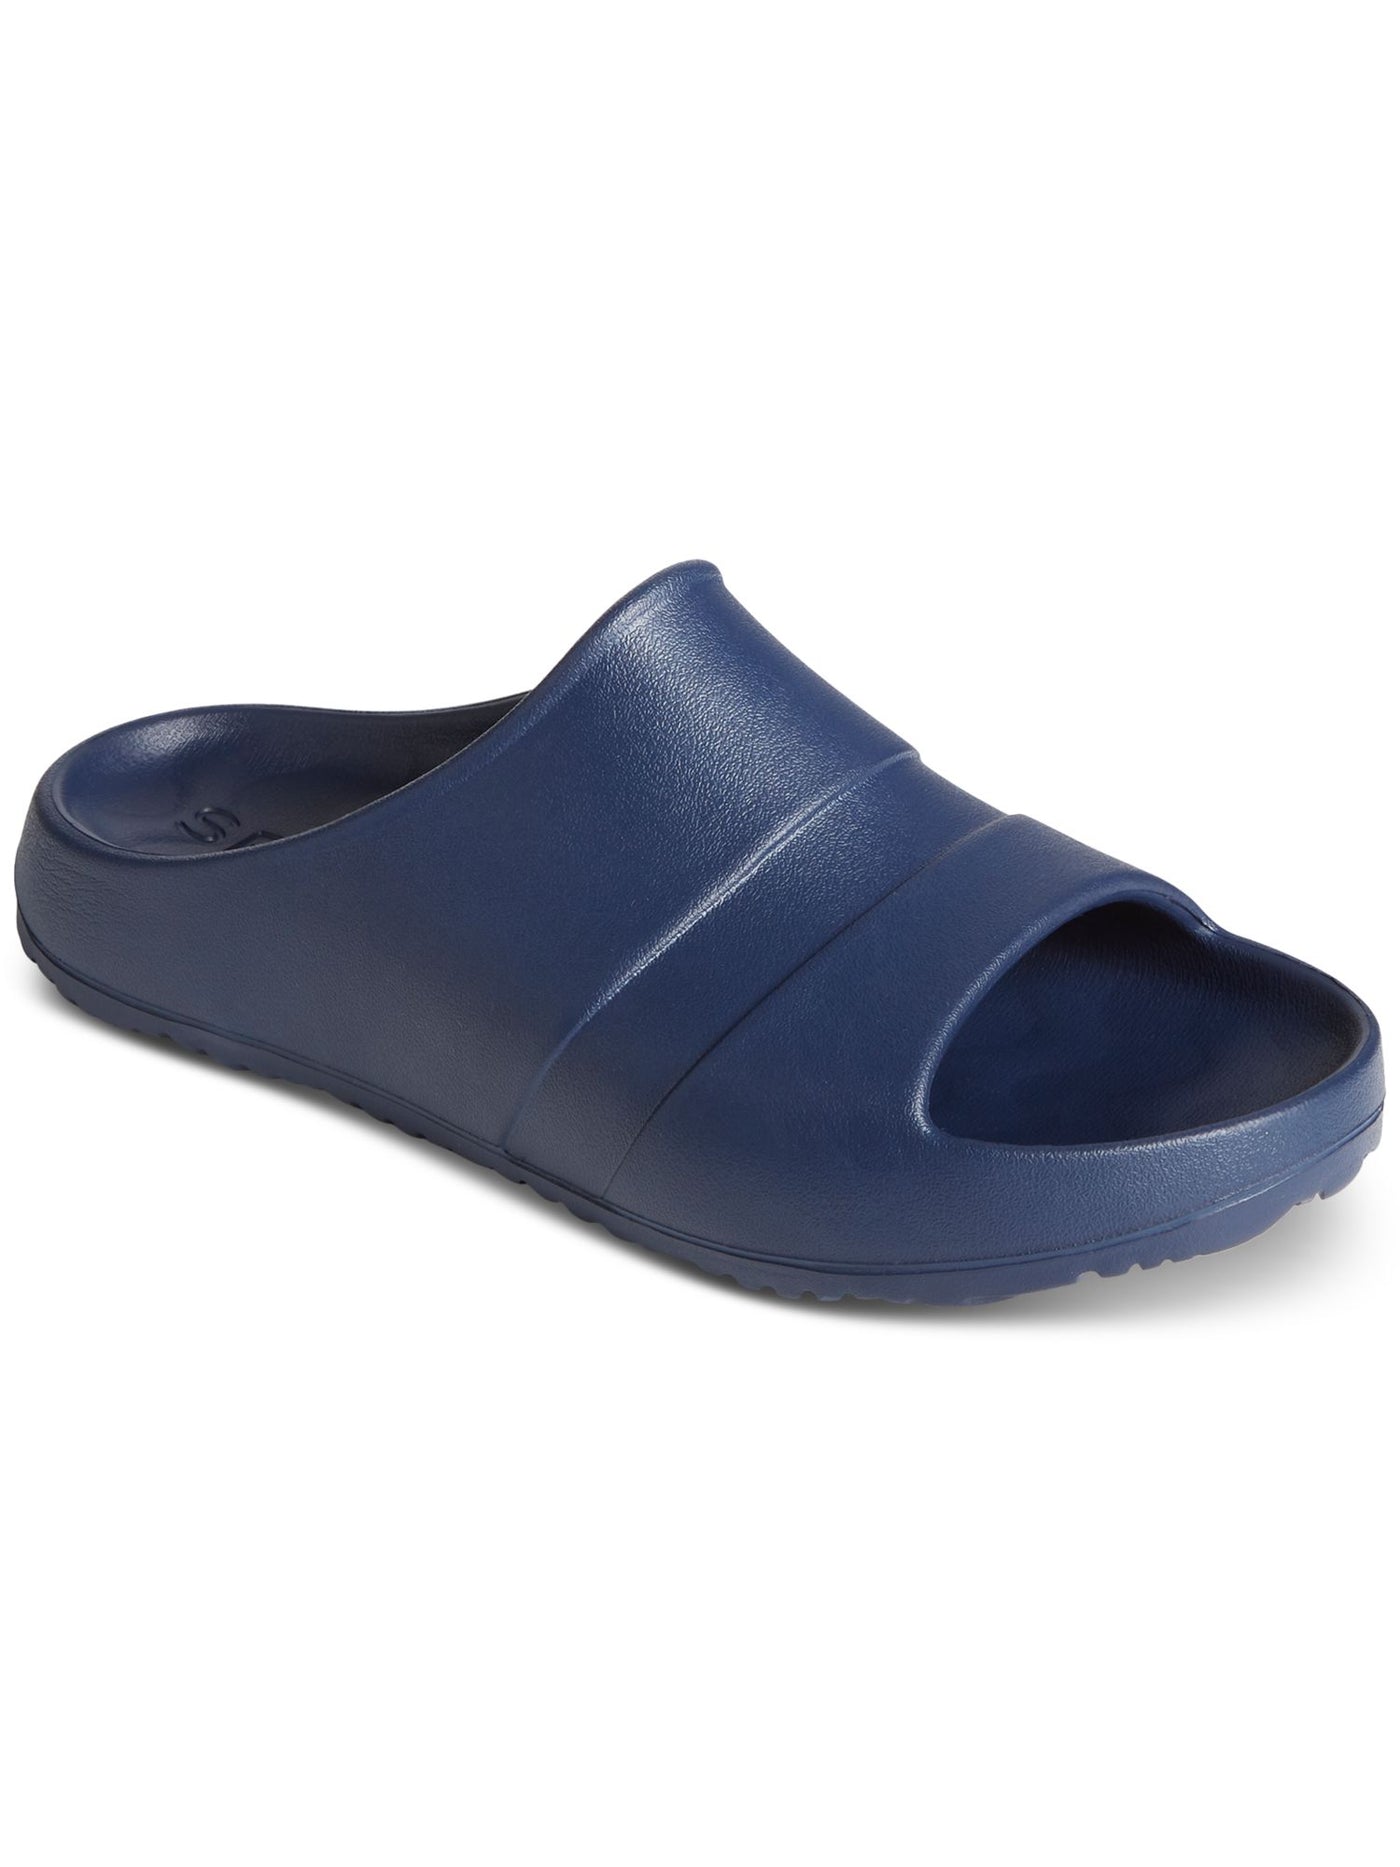 SPERRY Mens Navy Comfort Float Round Toe Slip On Slide Sandals Shoes 8